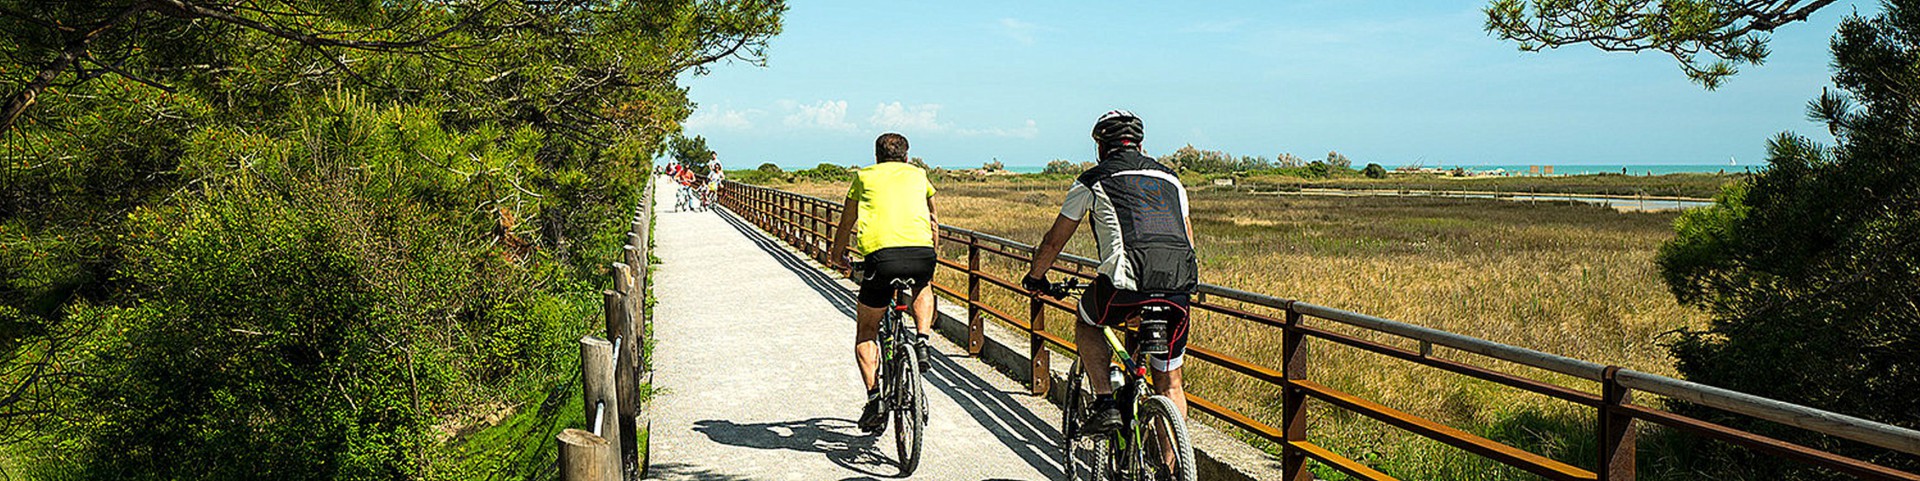 V Bibione najdete kilometry cyklostezek